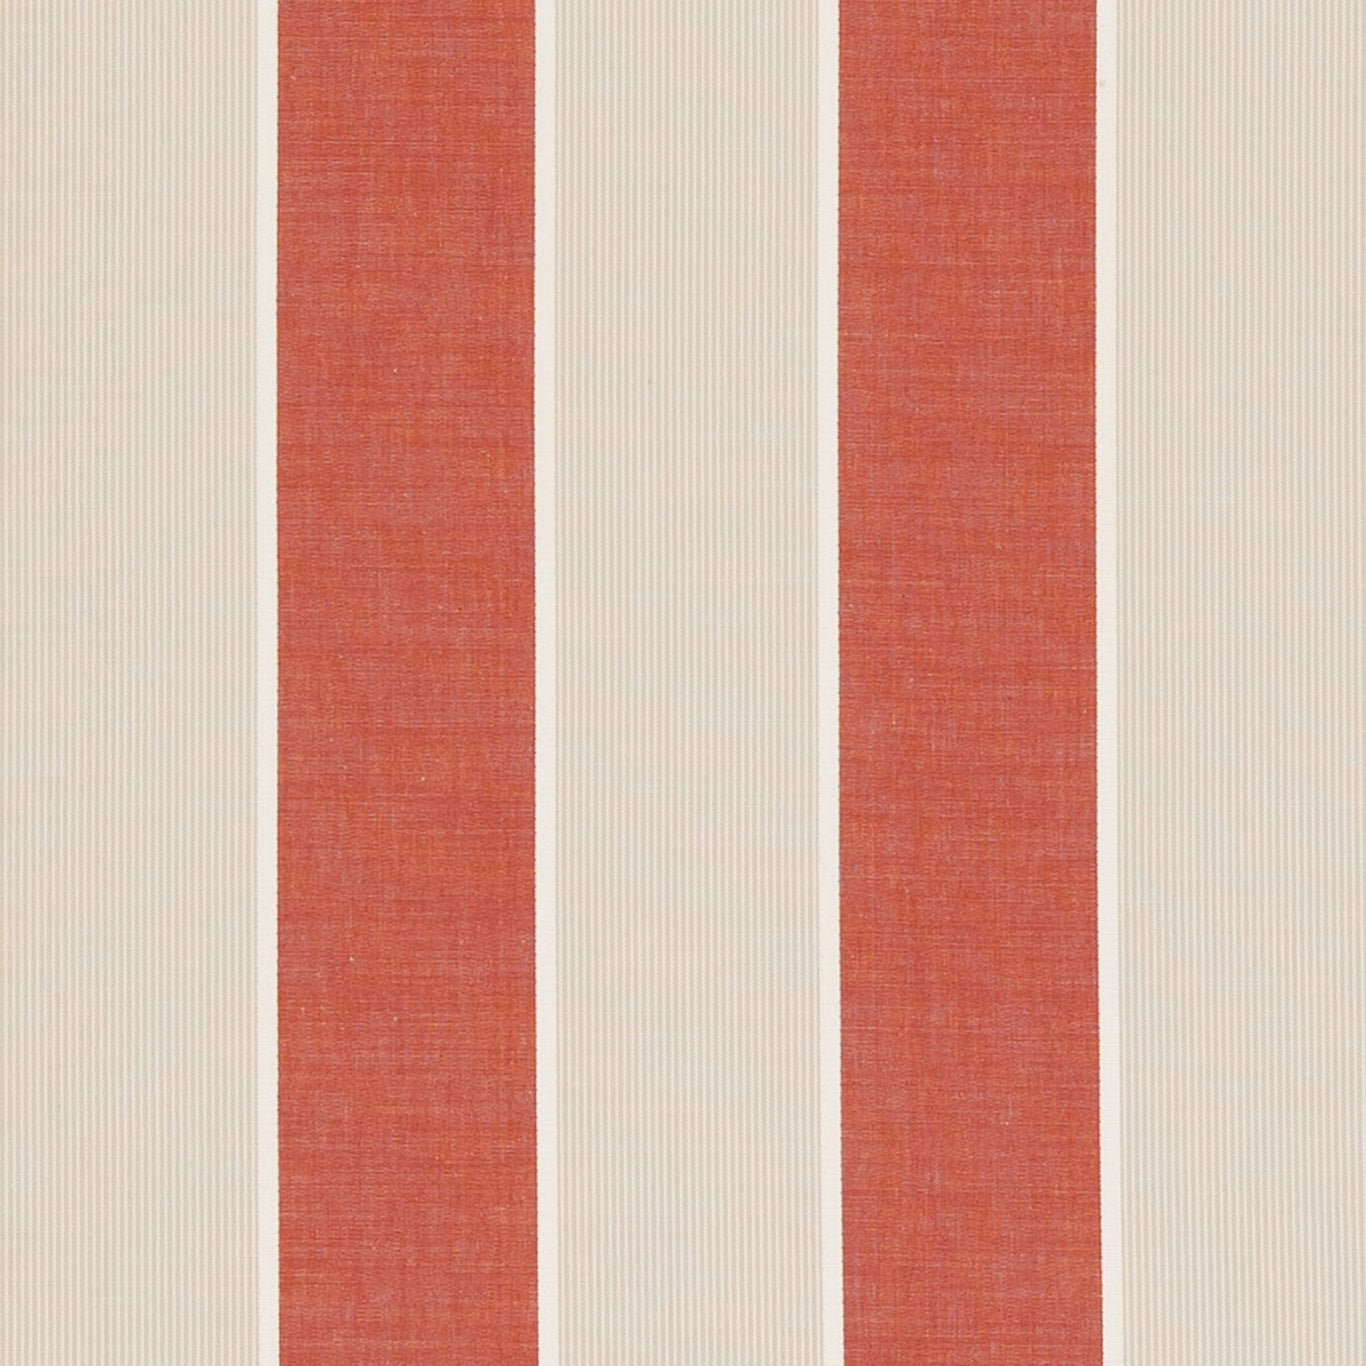 Chatburn Fabric by Clarke & Clarke - F0597/06 - Spice